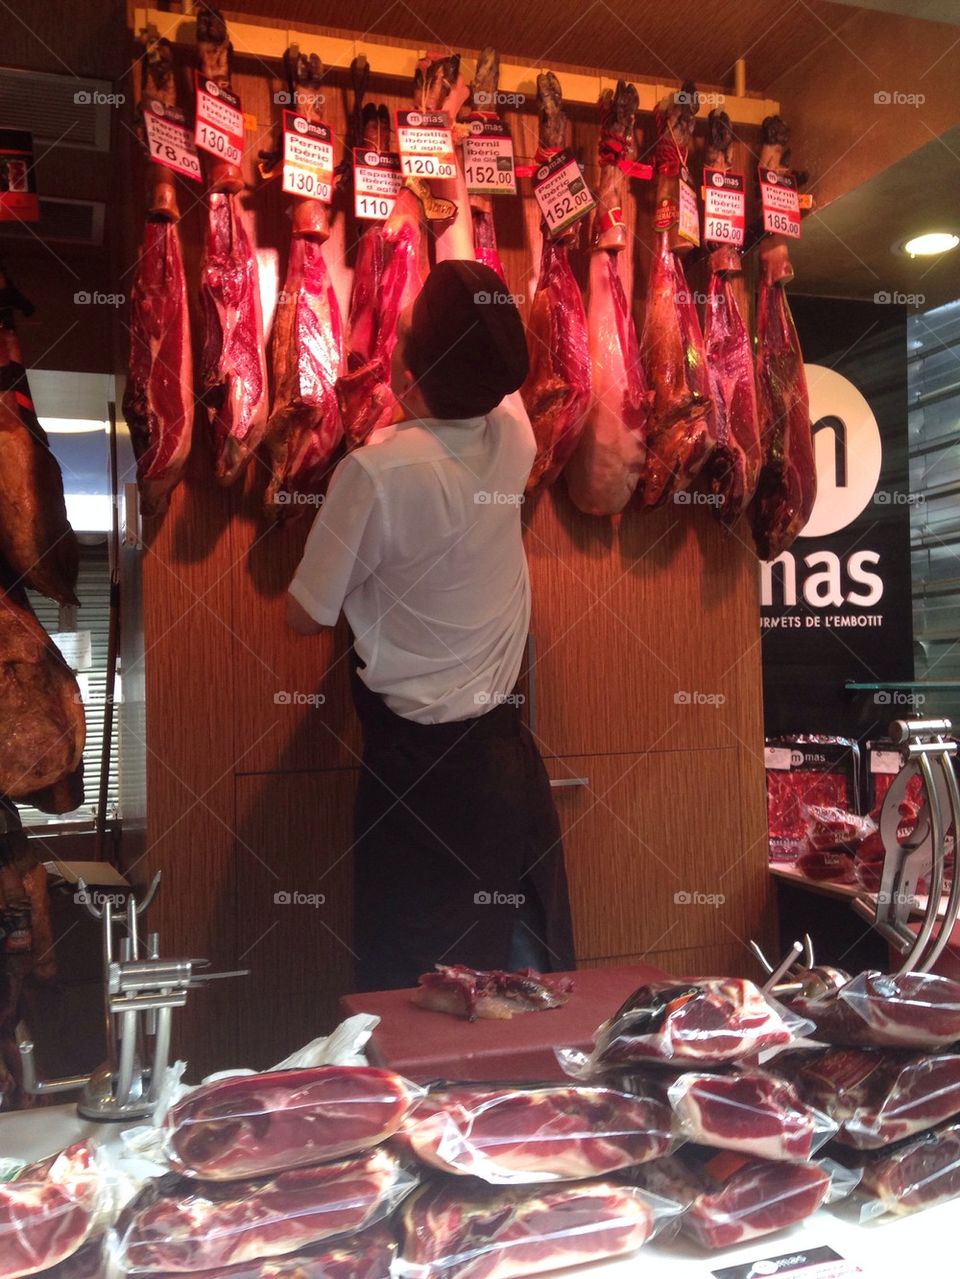 Barcelona meats